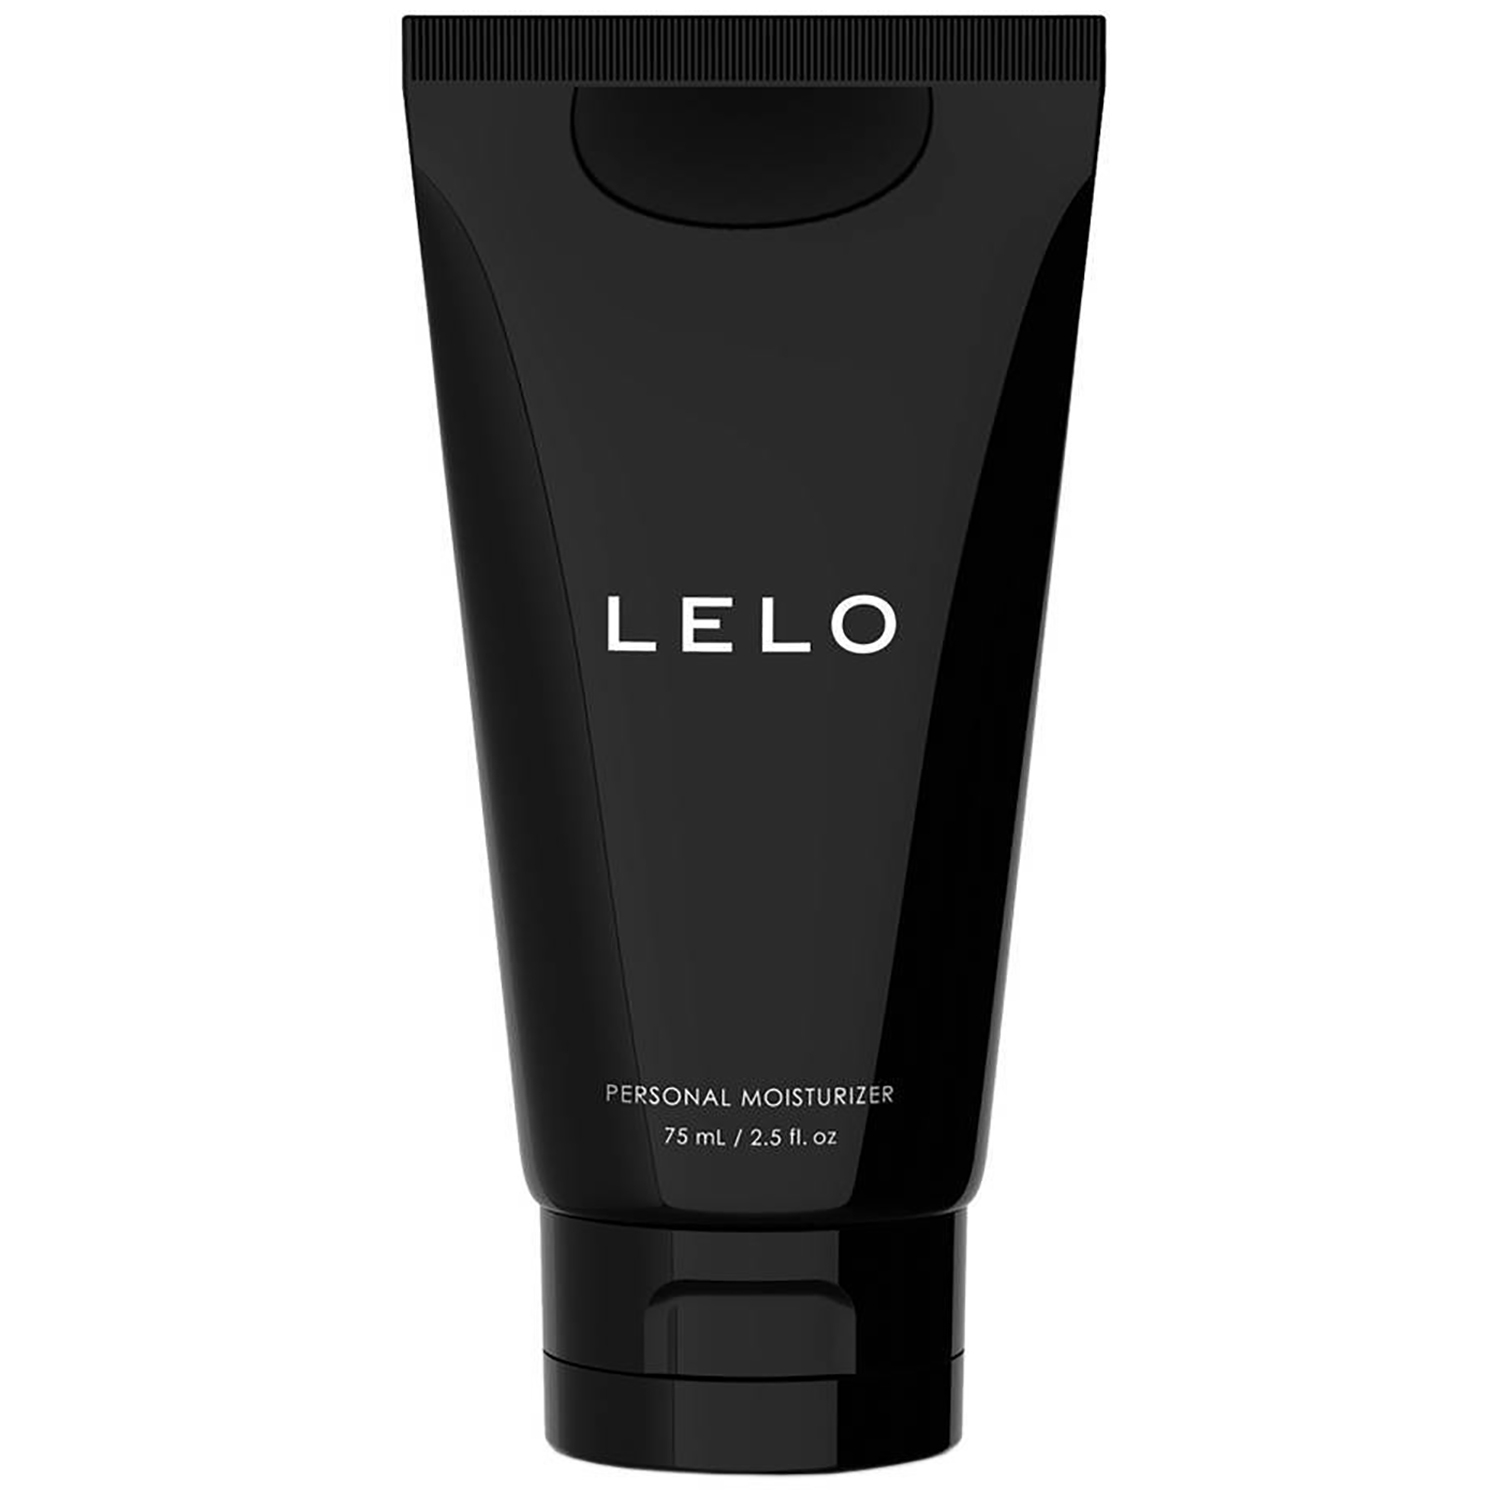 LELO Personal Moisturizer Water-based Lube 75 ml - Clear